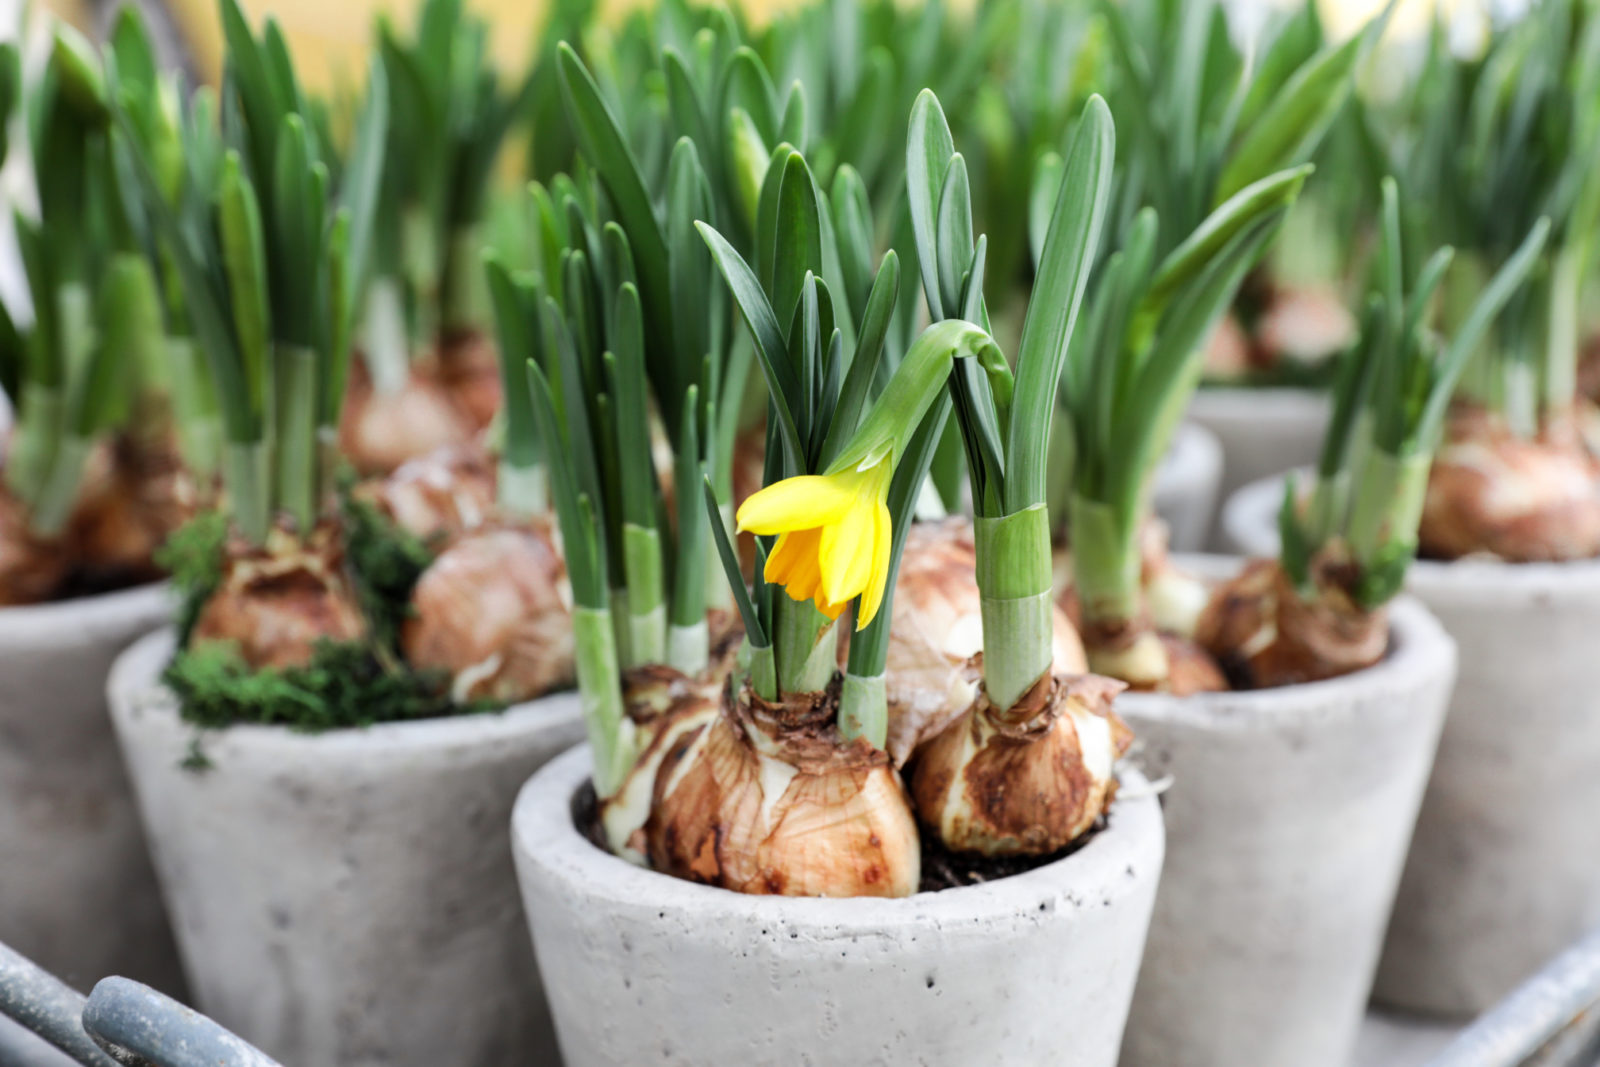 When Should I Plant Daffodil Bulbs